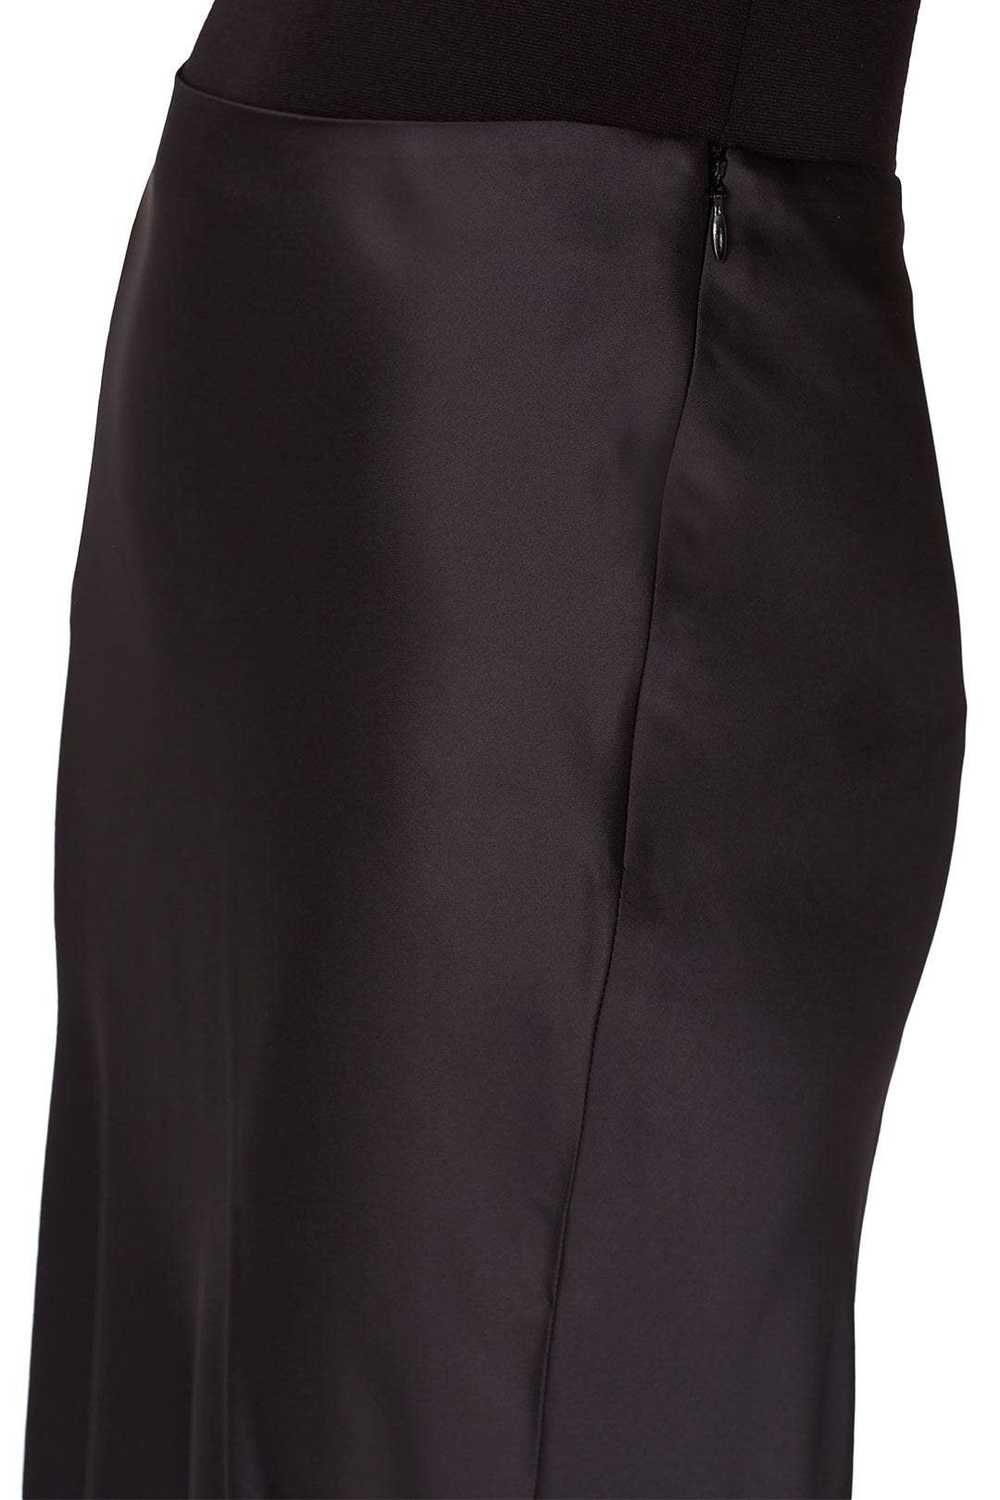 Club Monaco Black Slip Skirt - image 4